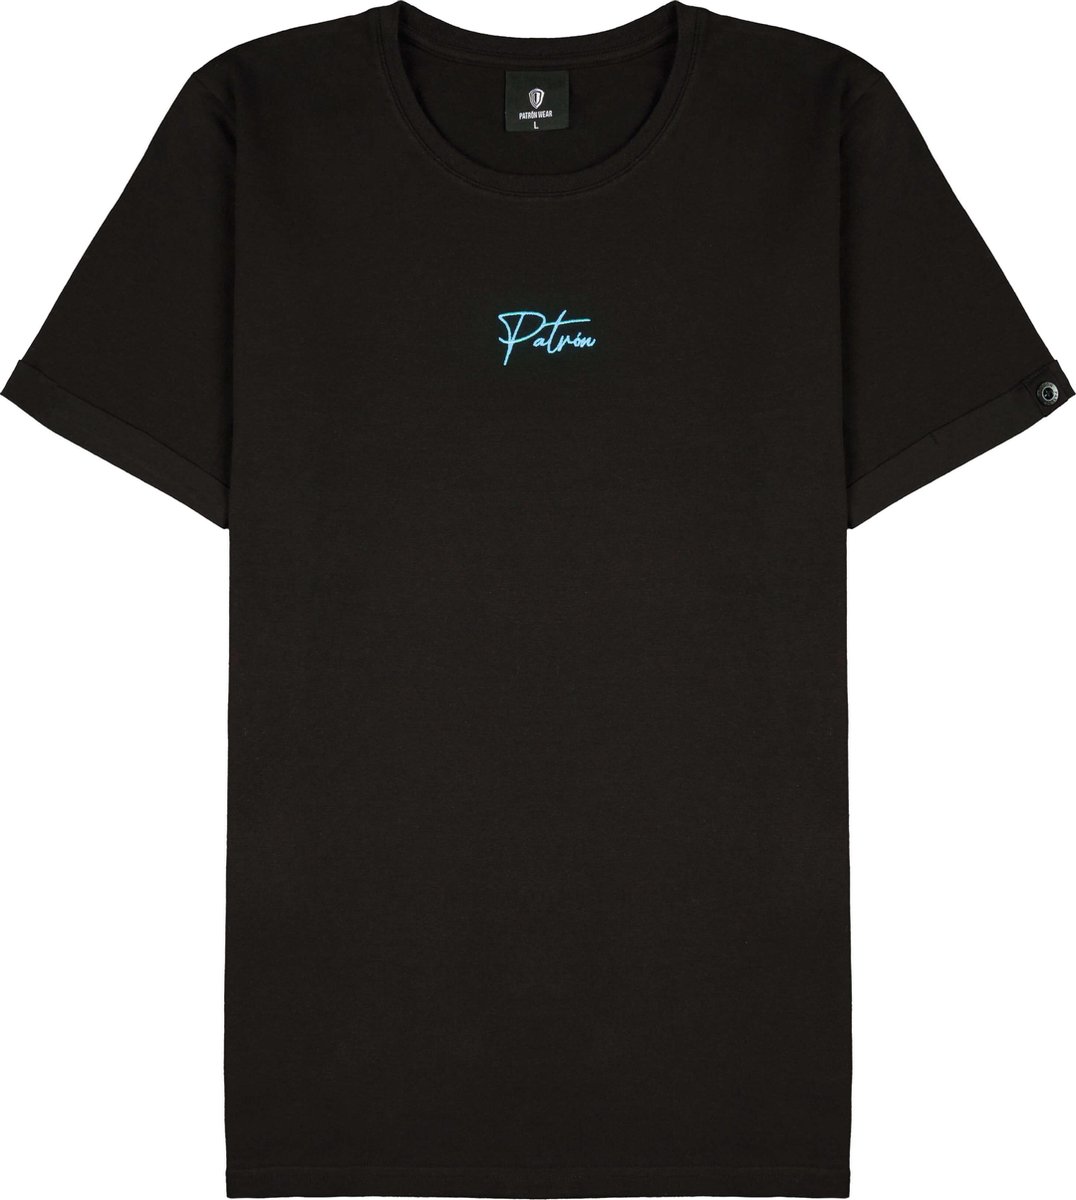 Patrón Wear - Emilio T-shirt Black/Blue - Maat S